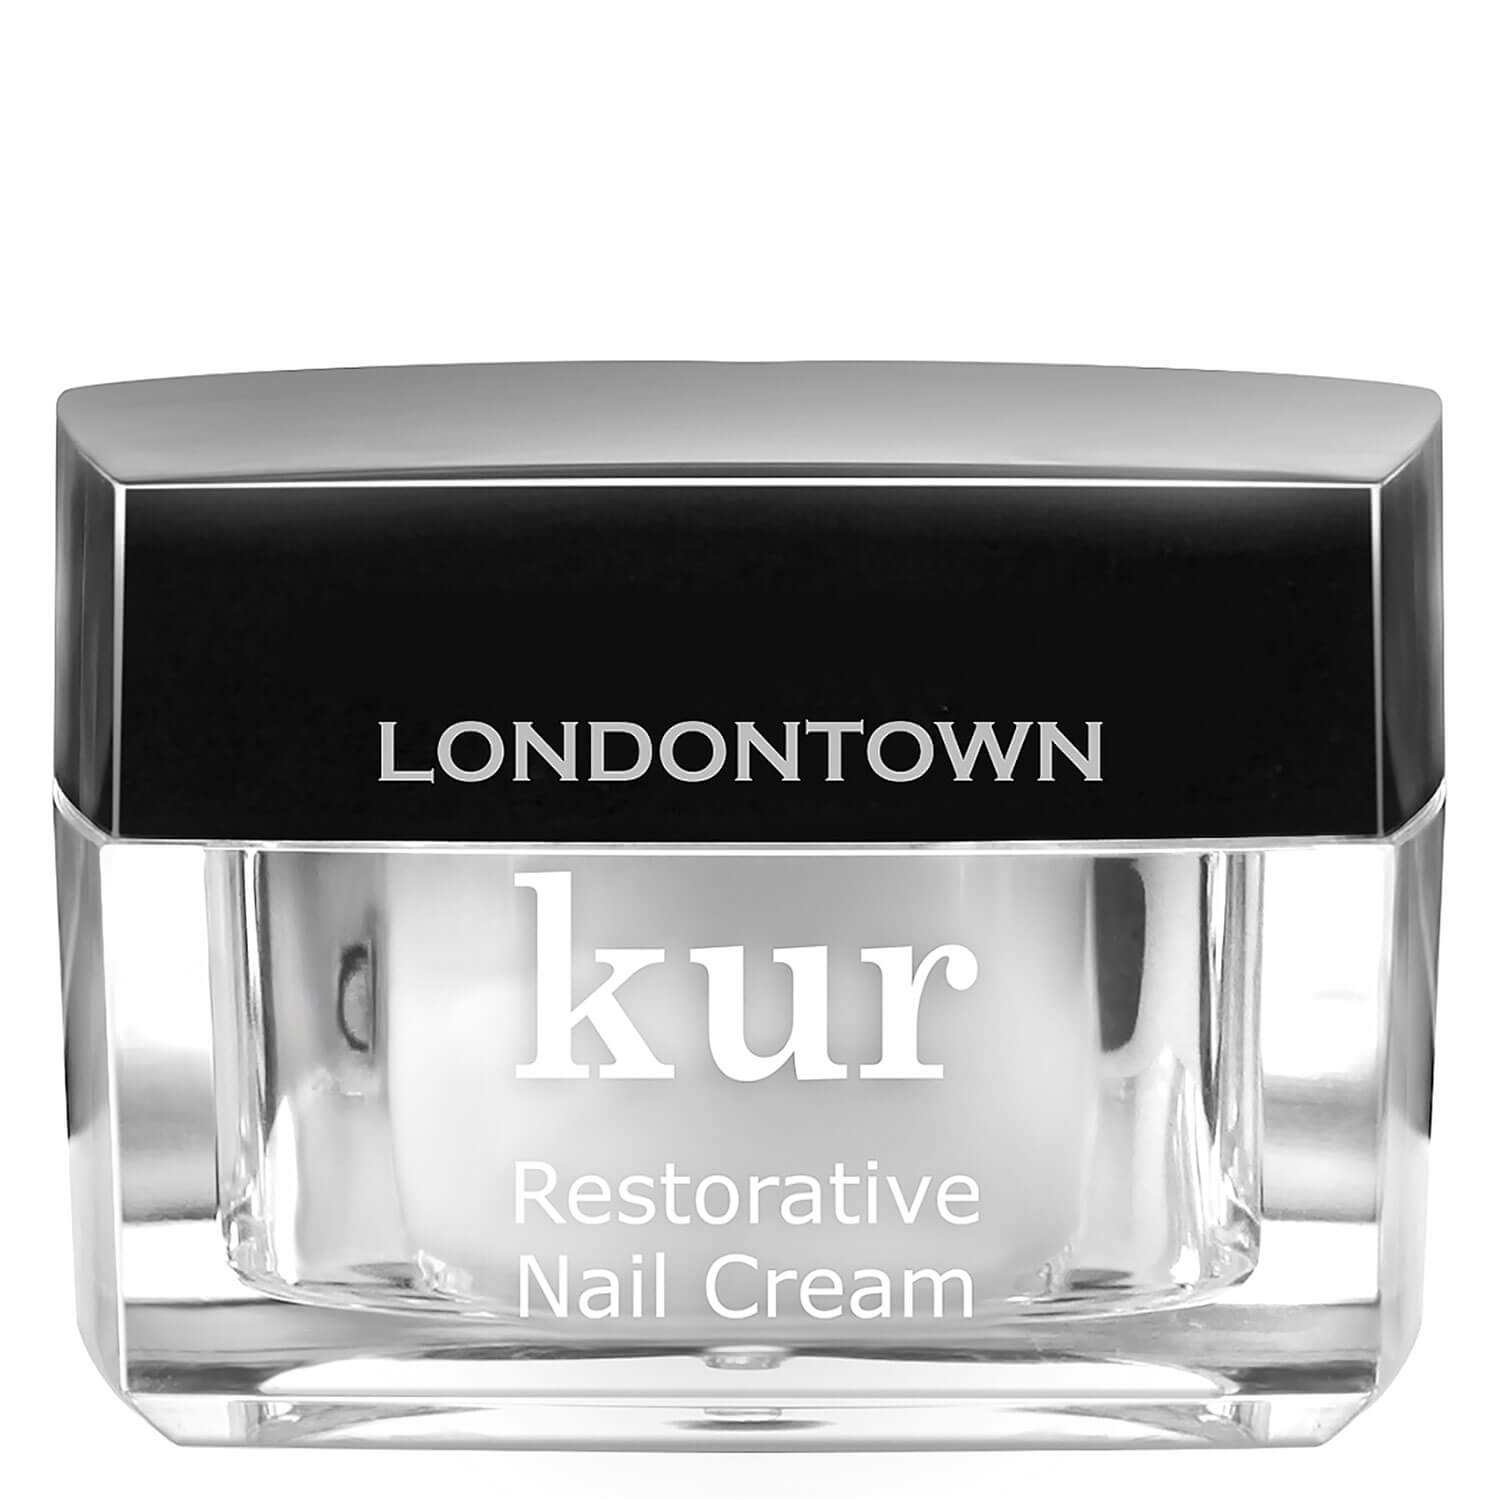 Product image from kur - Restorative Nail Cream